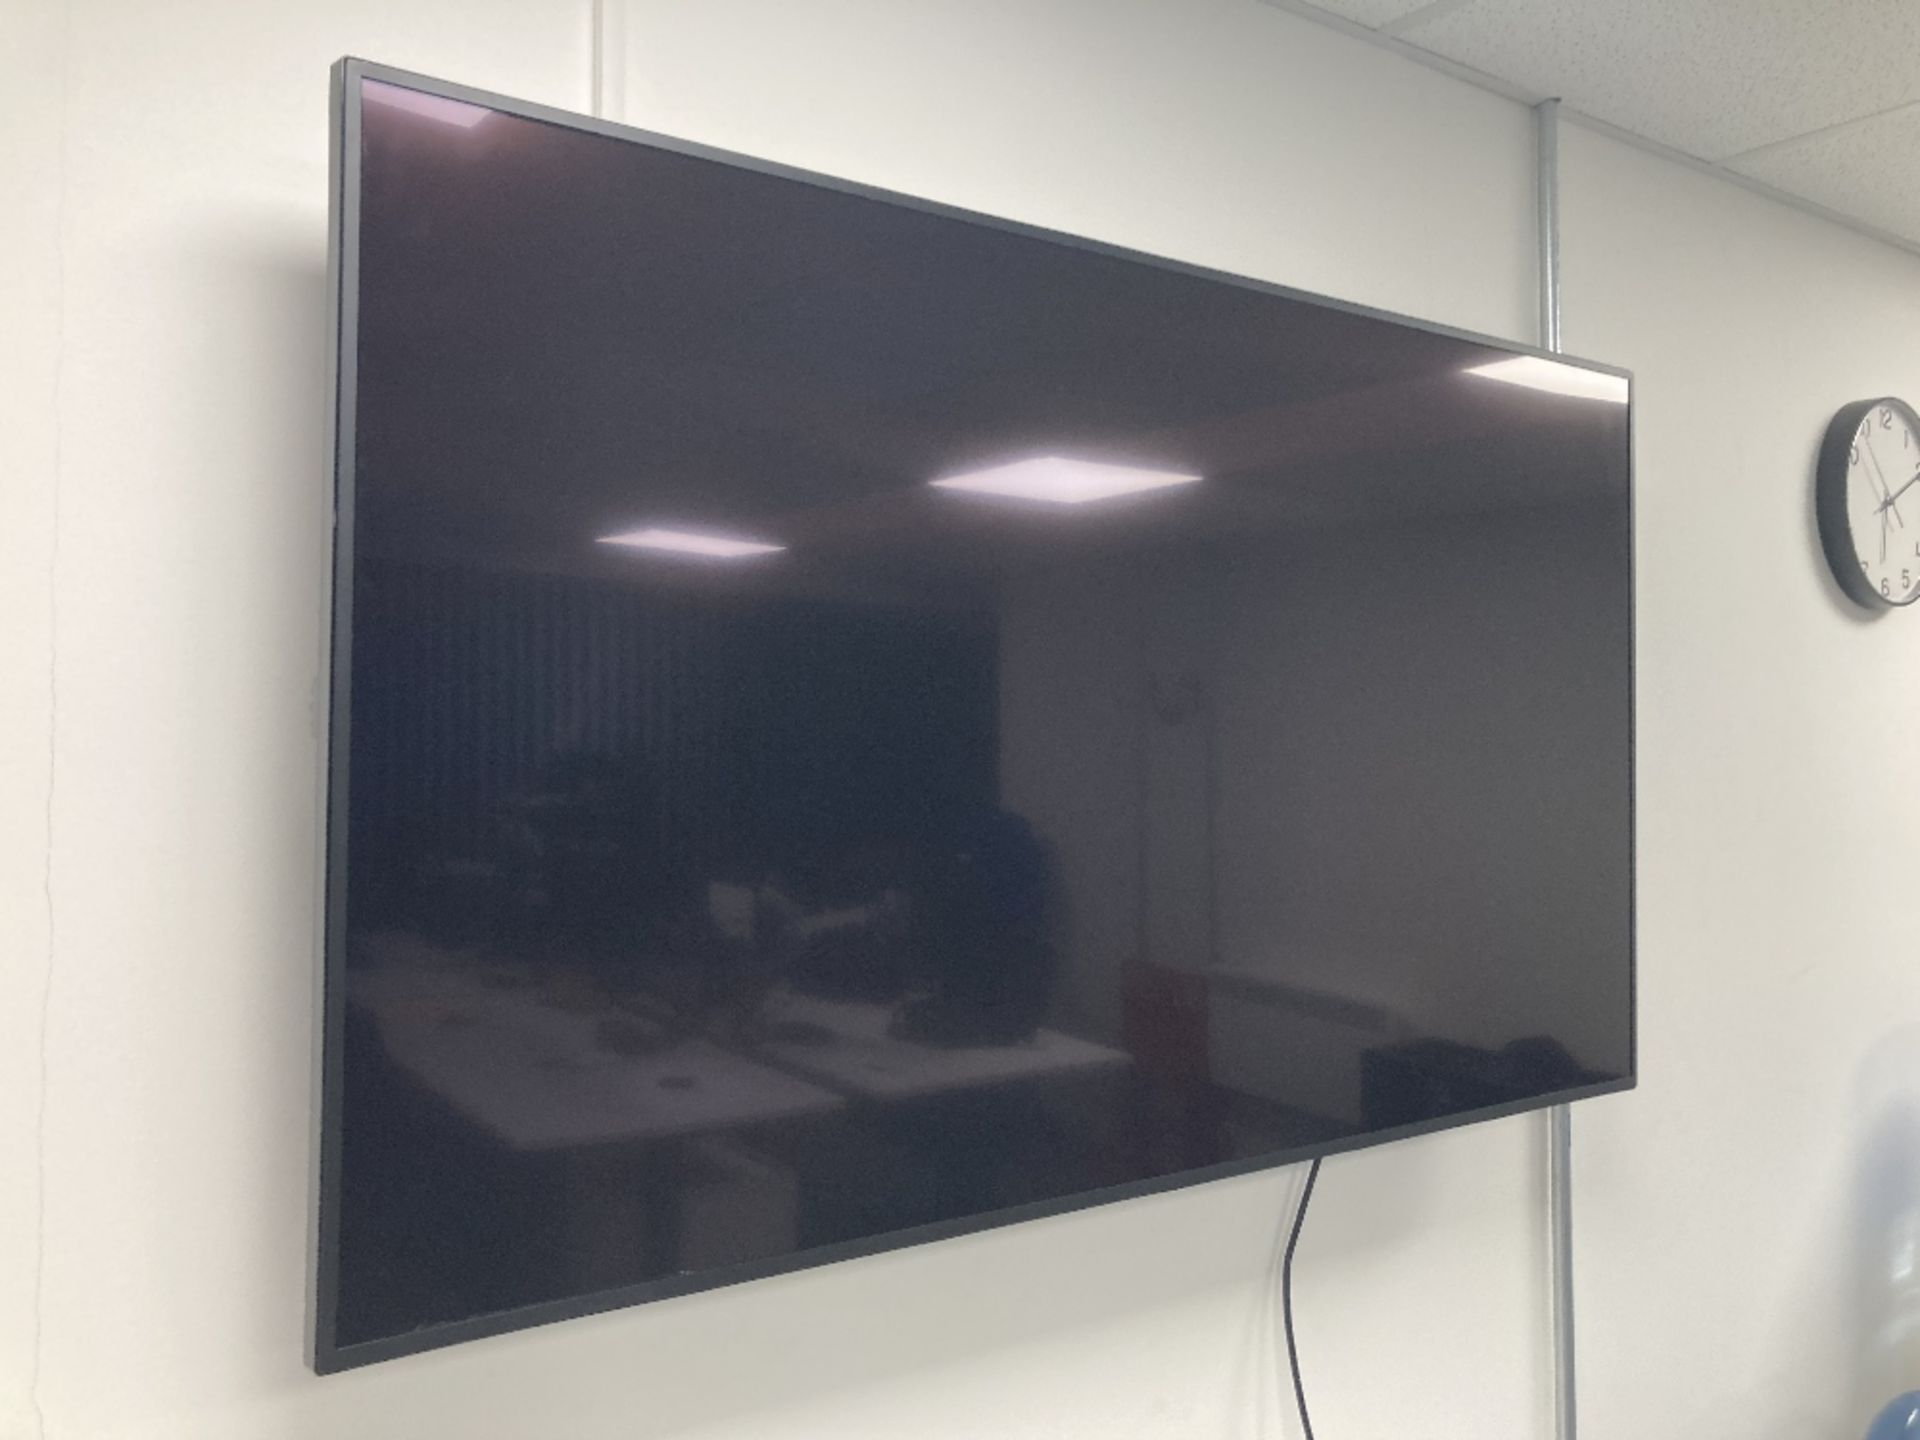 Panasonic LCD Flat Panel Display, Wall Bracket & Remote Control - Image 3 of 4